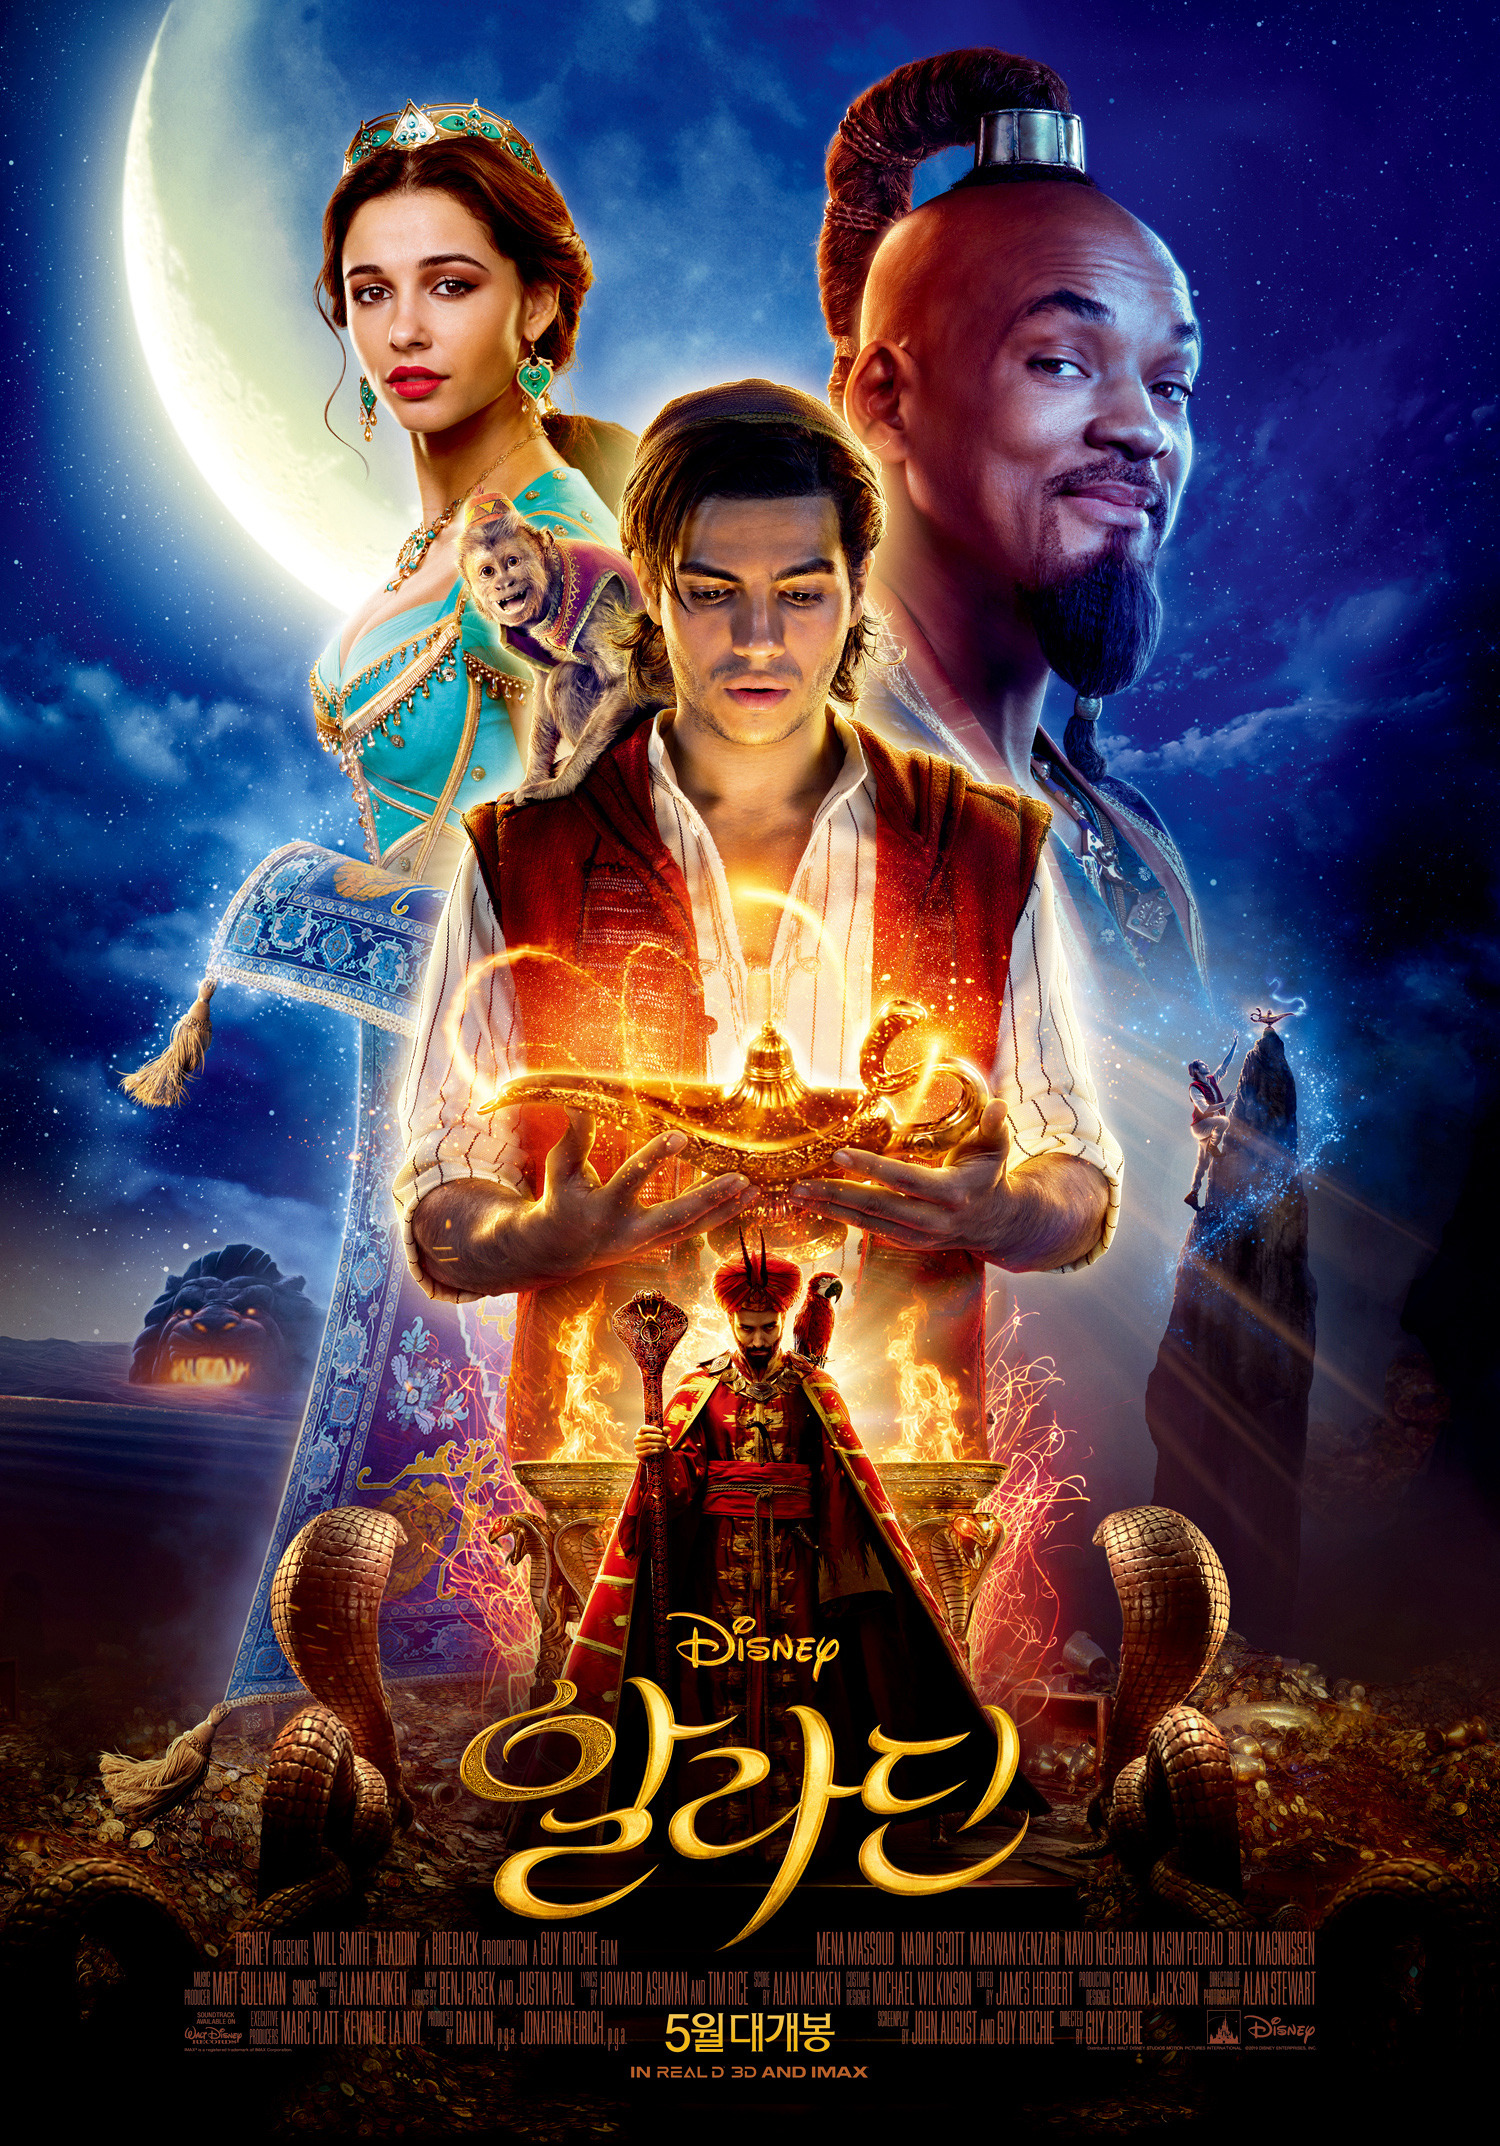 Mega Sized Movie Poster Image for Aladdin (#4 of 12)